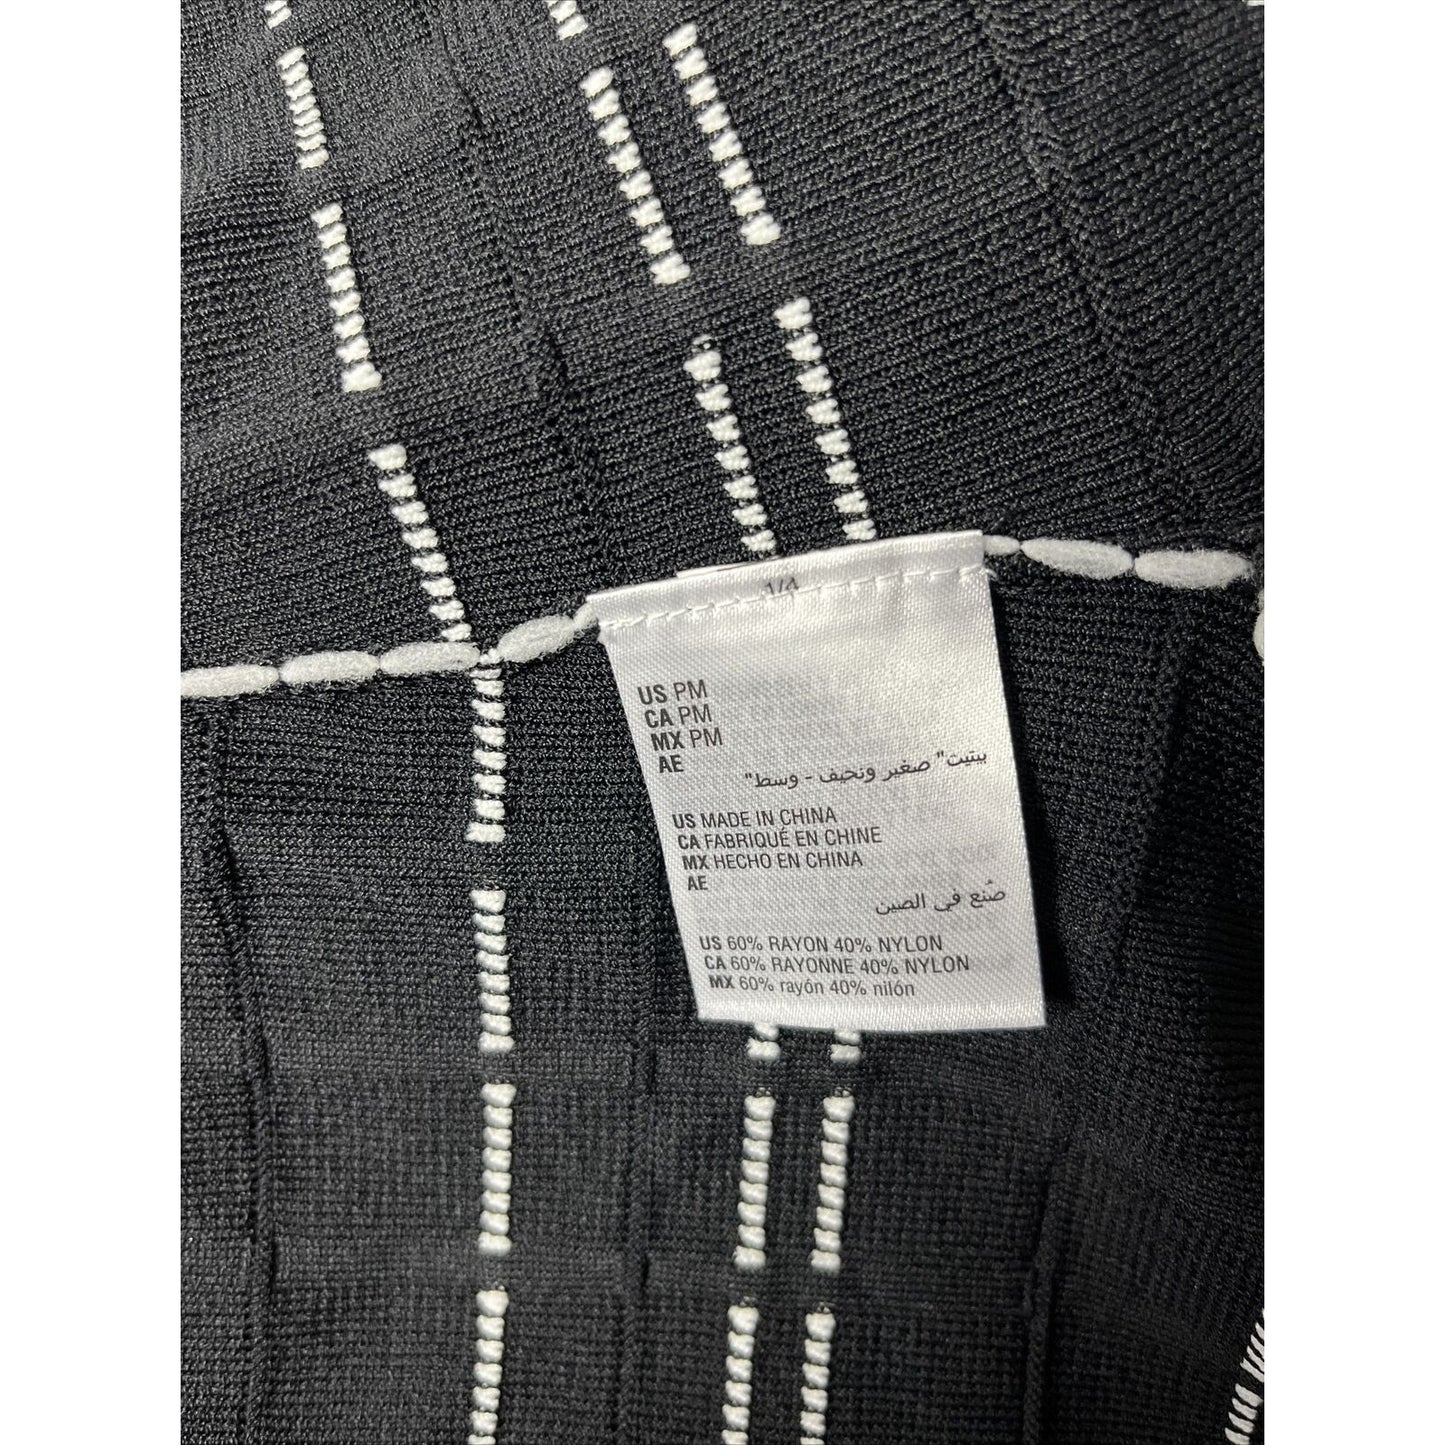 Alfani Black/White Dot Stitch 3/4 Sleeve Cardigan Size M Petite